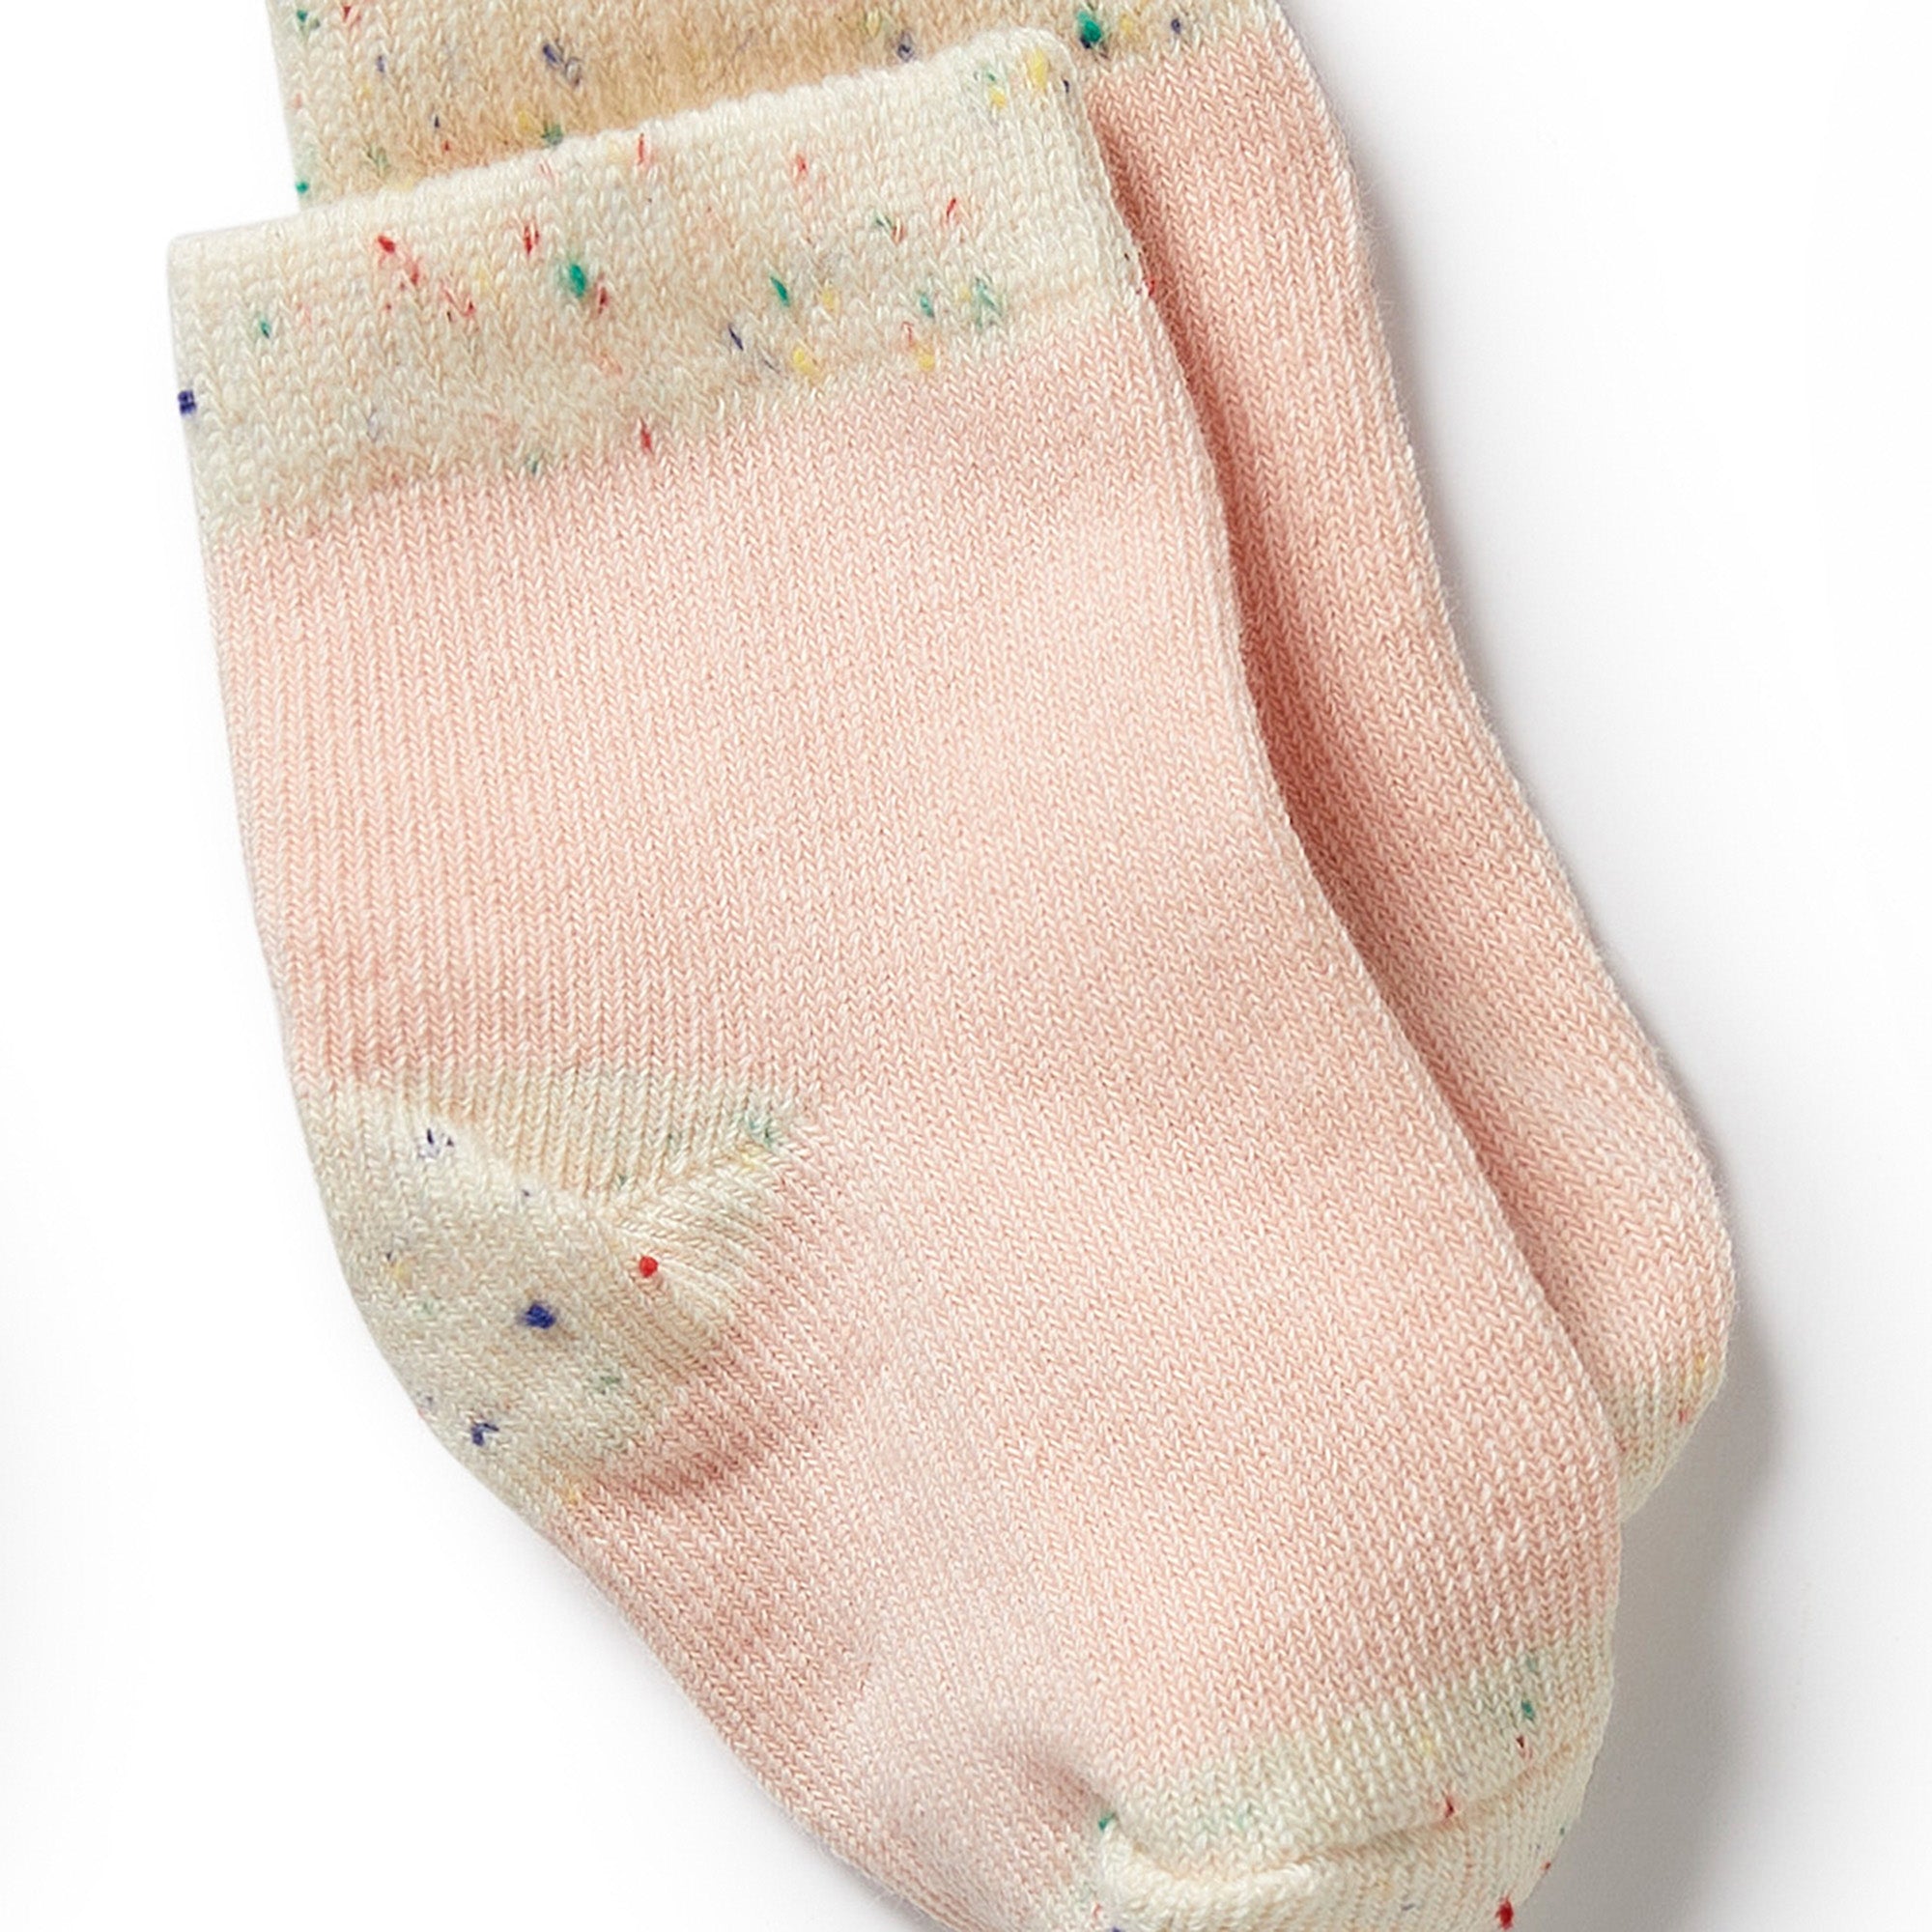 Wilson & Frenchy - Organic 3 Pack Baby Socks - Mint Green, Cream, Pink